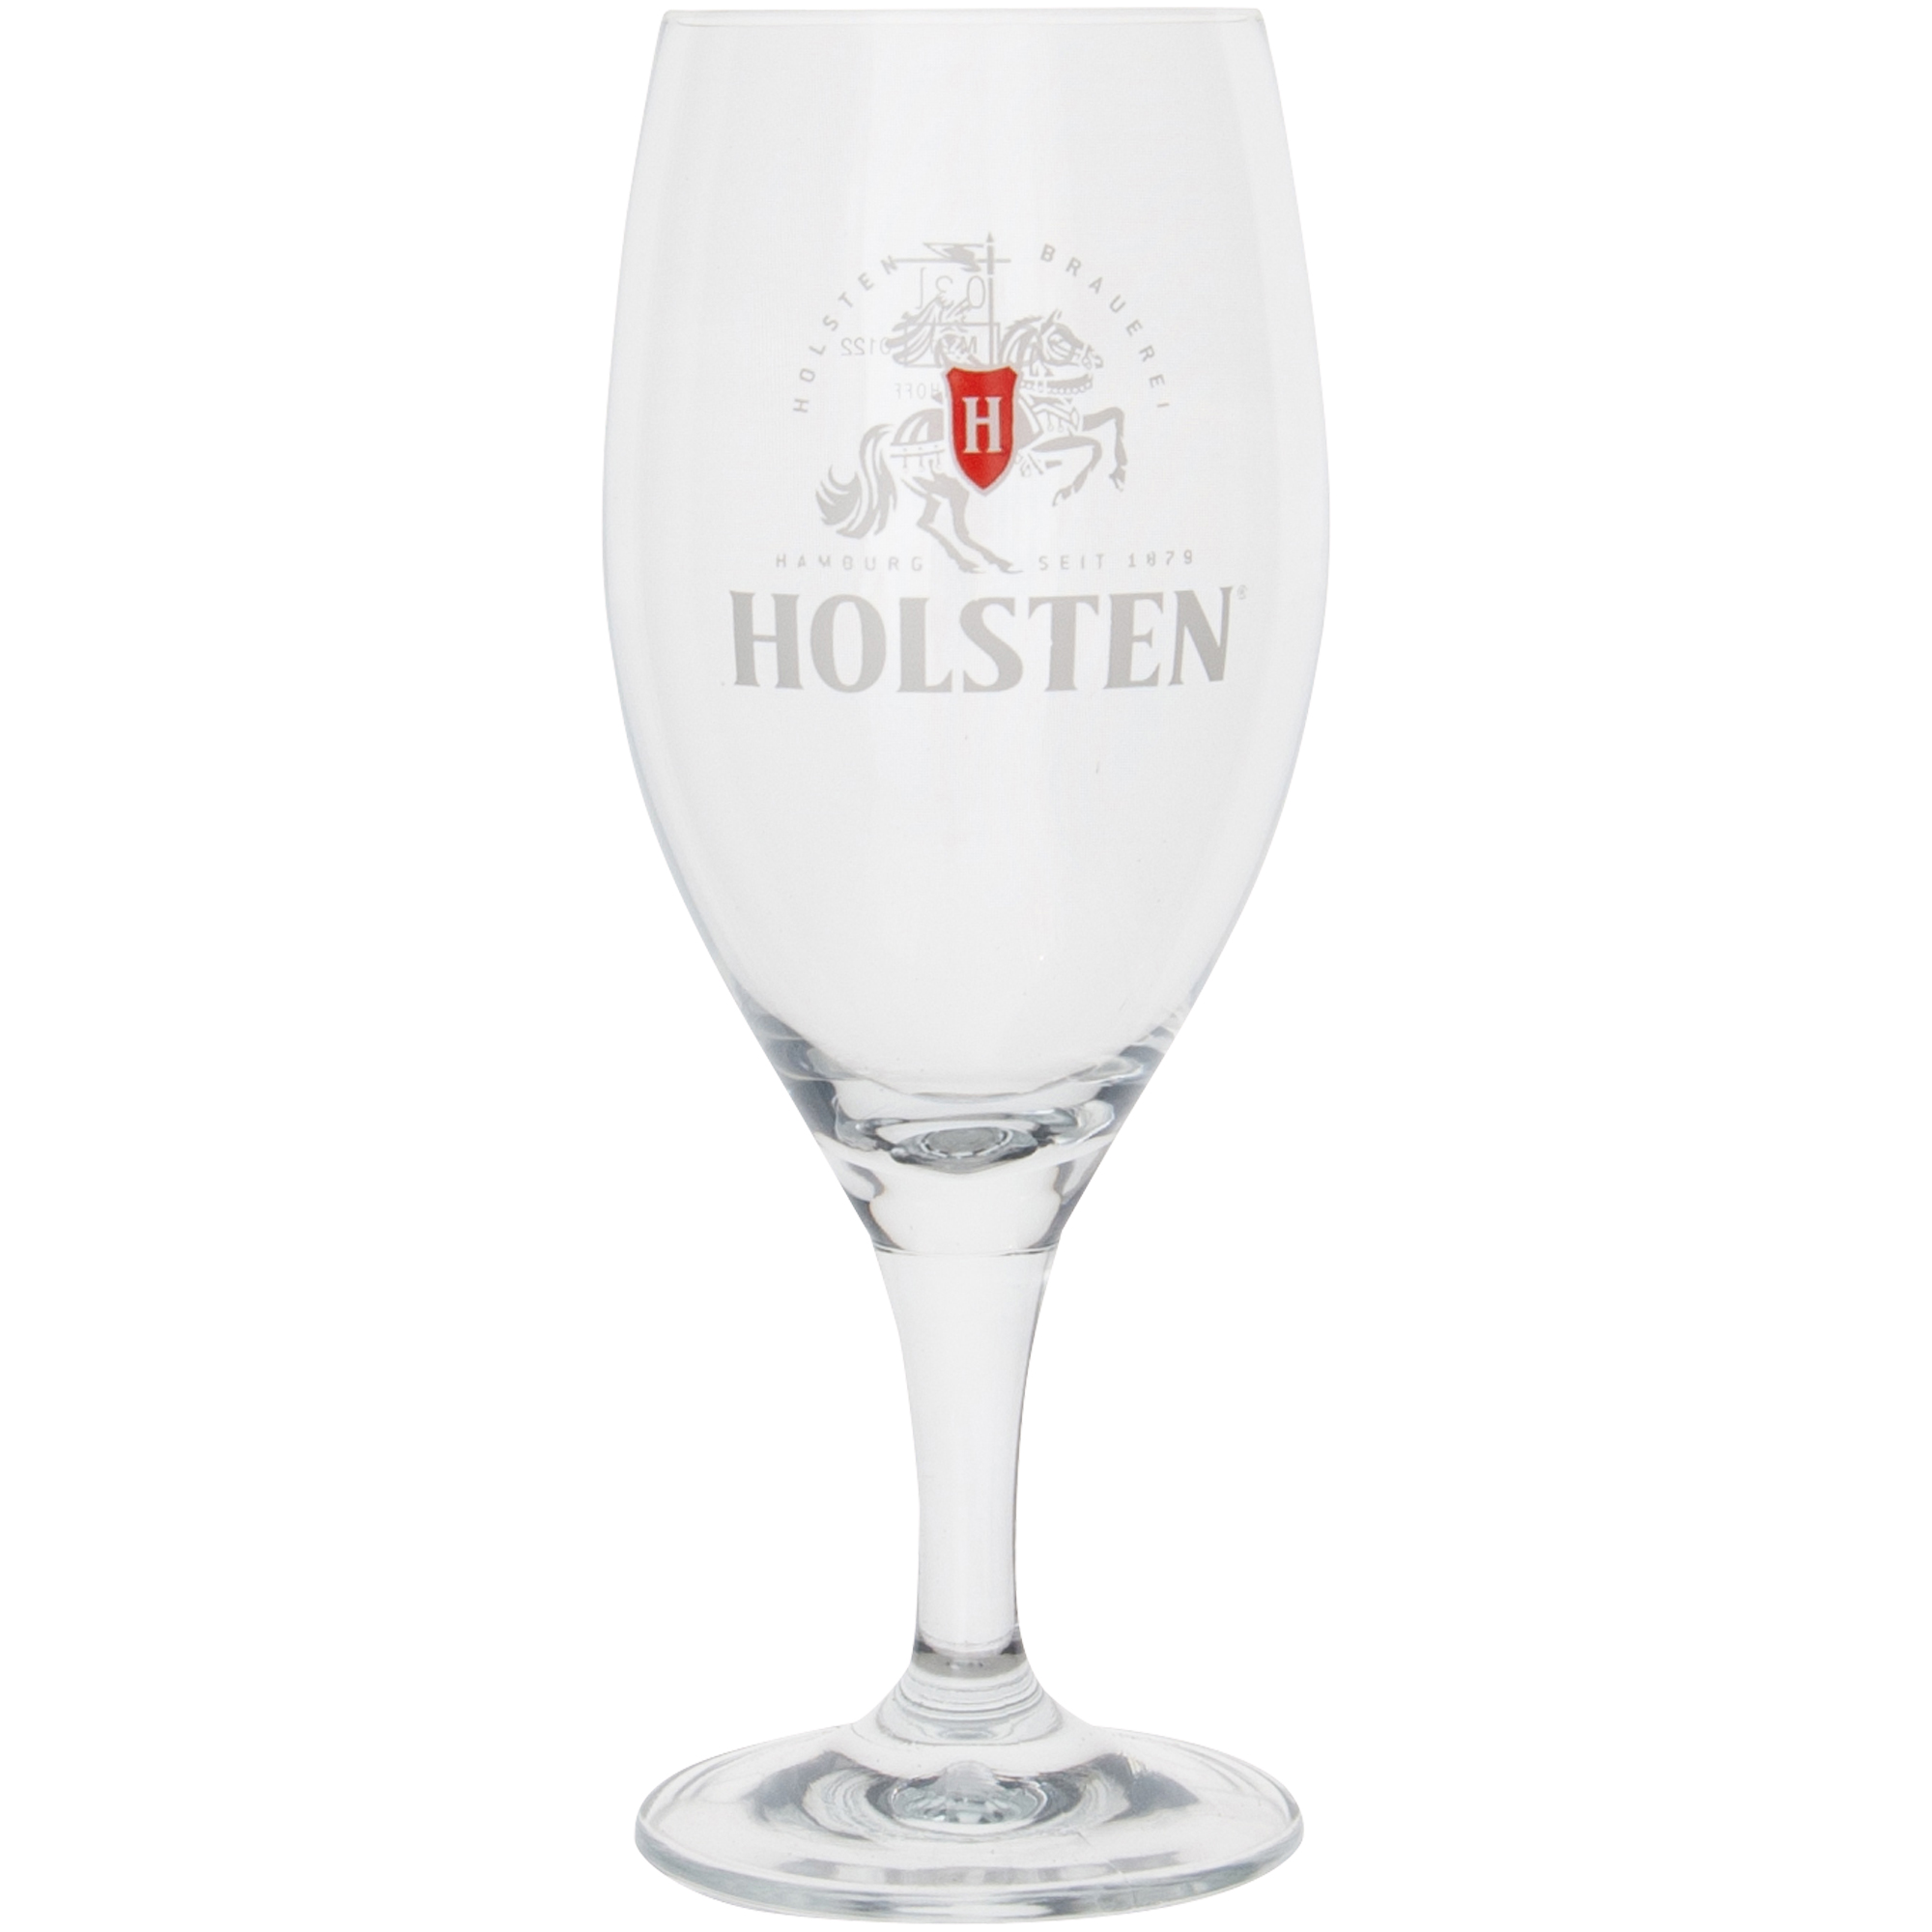 Holsten - Gläser Pokale - 6er Set